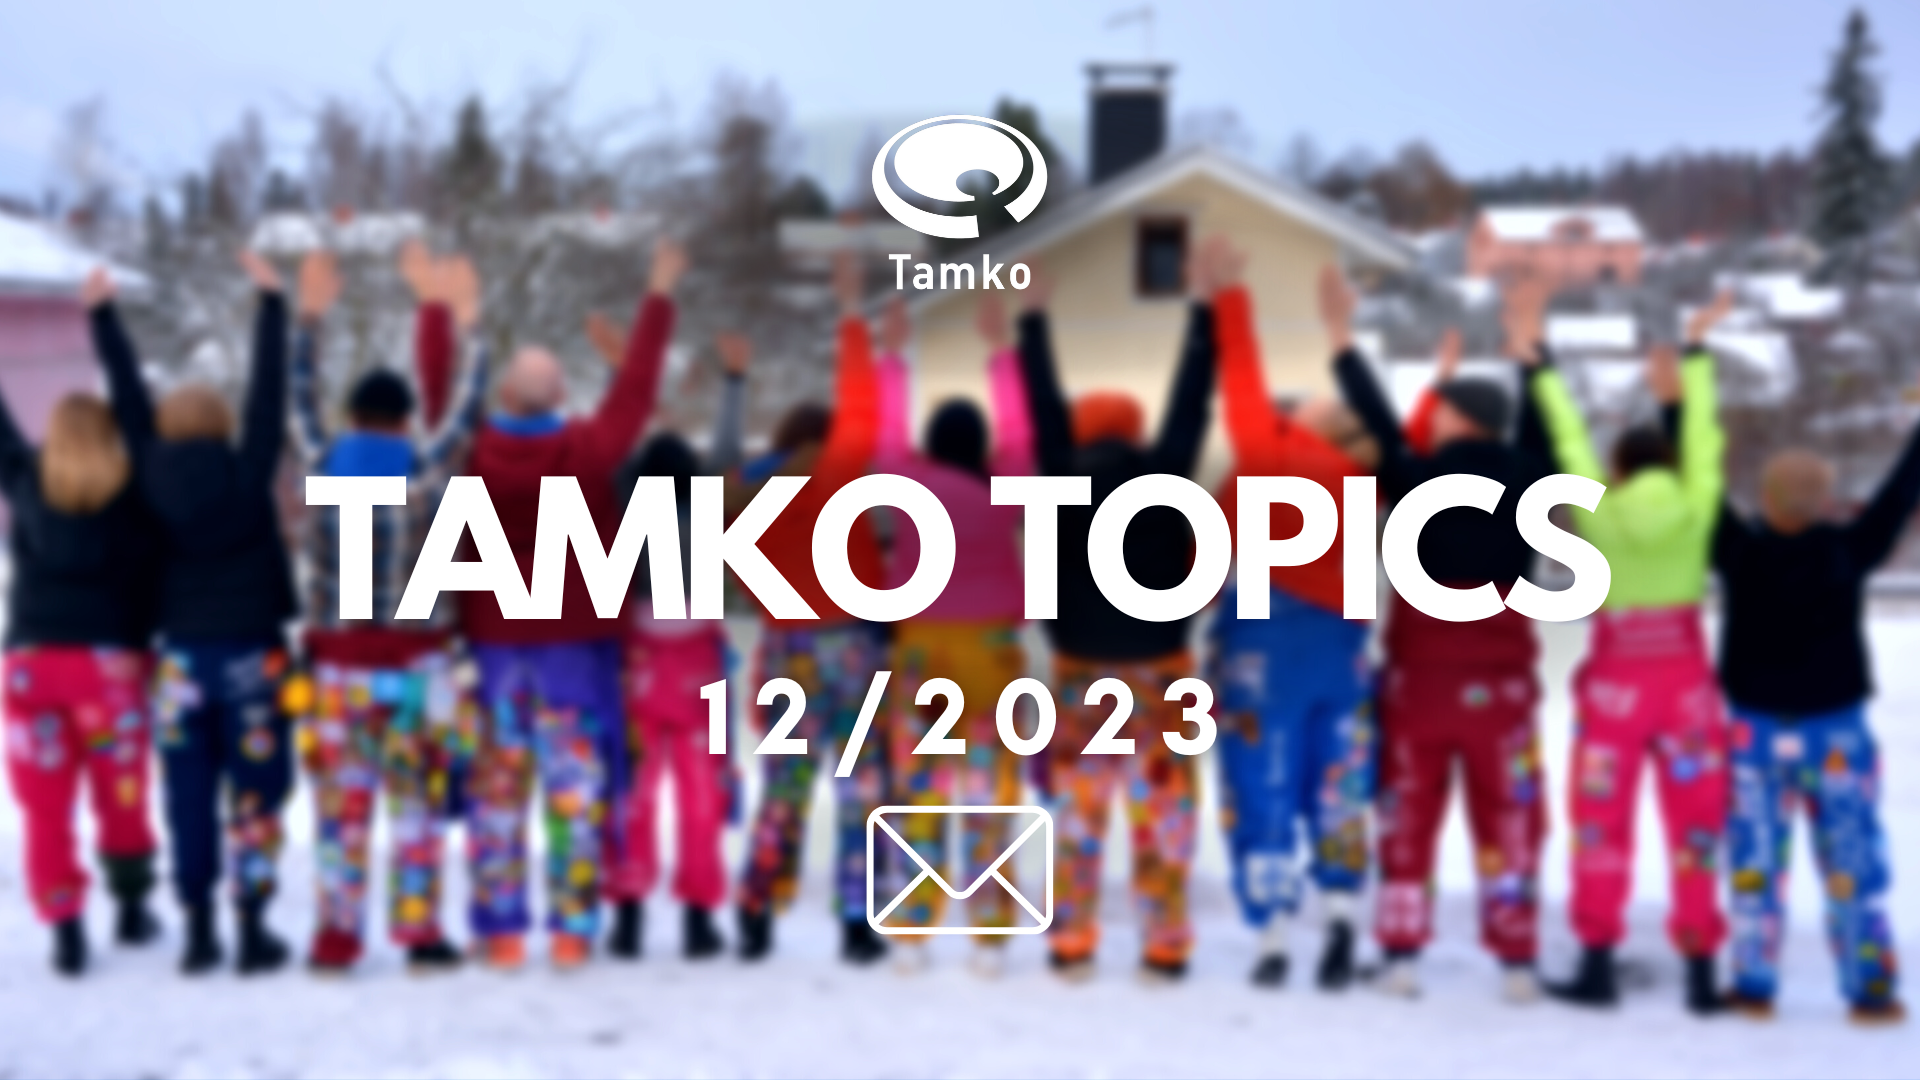 Tamko Topics 12/2023